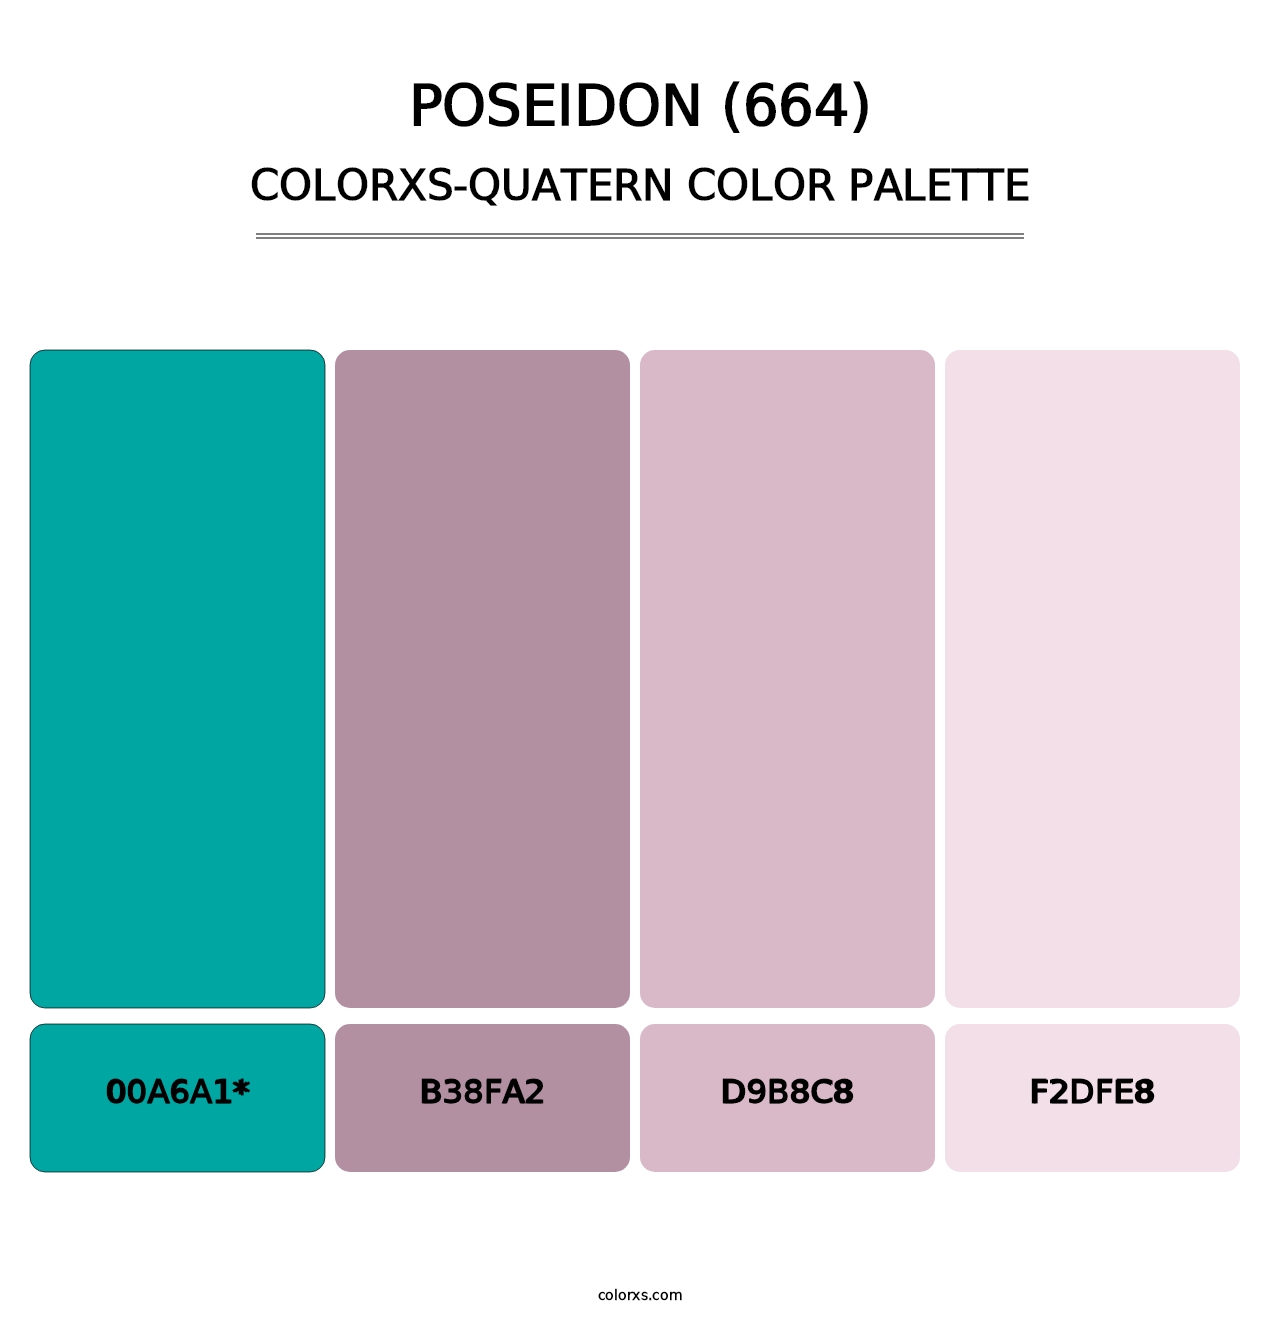 Poseidon (664) - Colorxs Quatern Palette